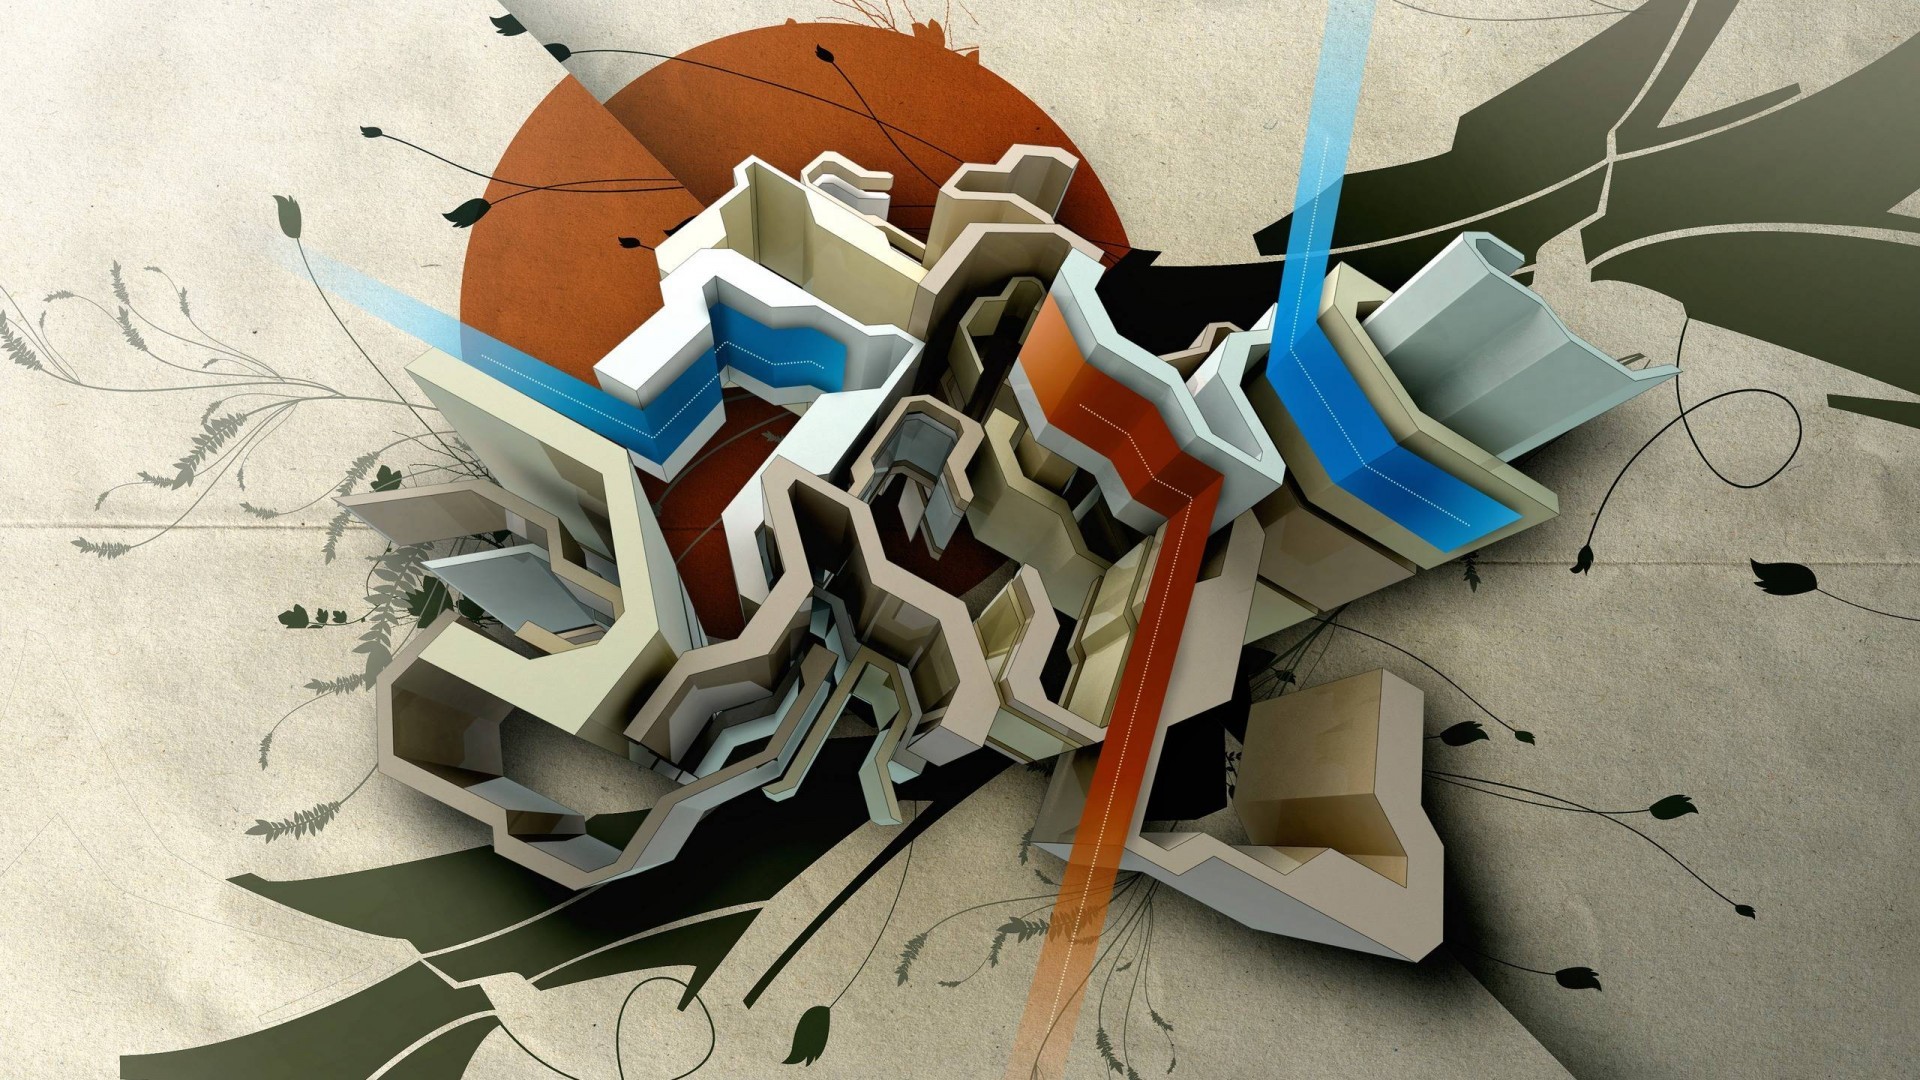 General 1920x1080 abstract digital art artwork